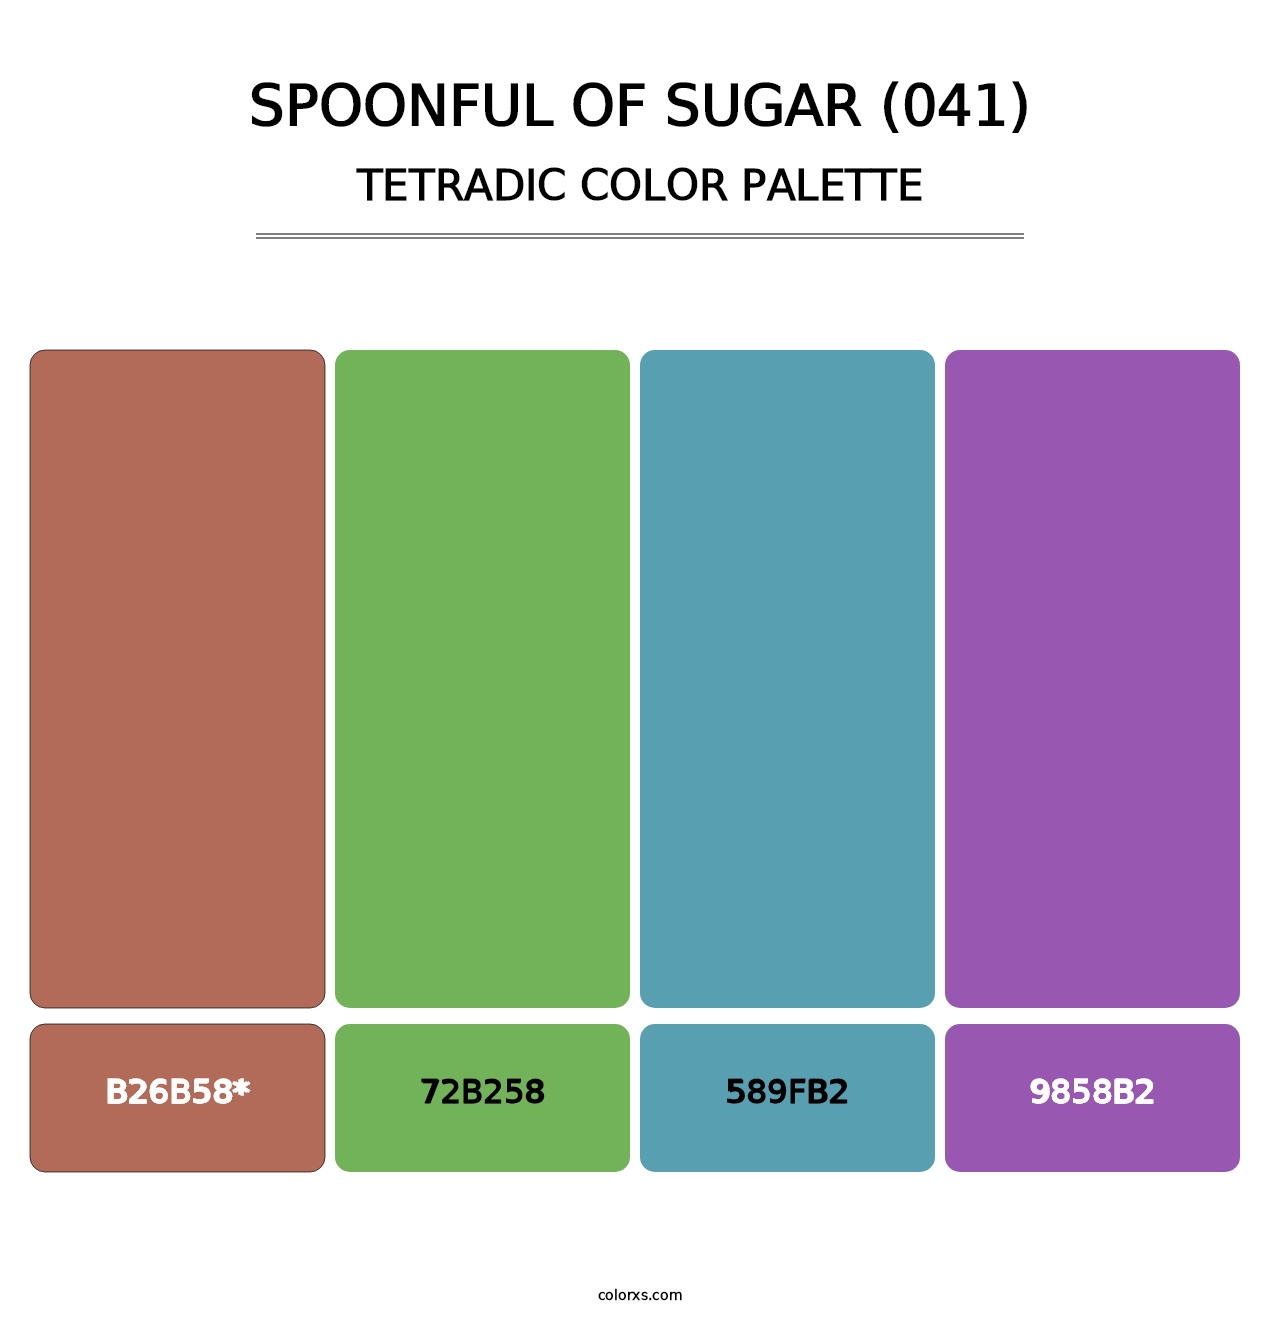 Spoonful of Sugar (041) - Tetradic Color Palette